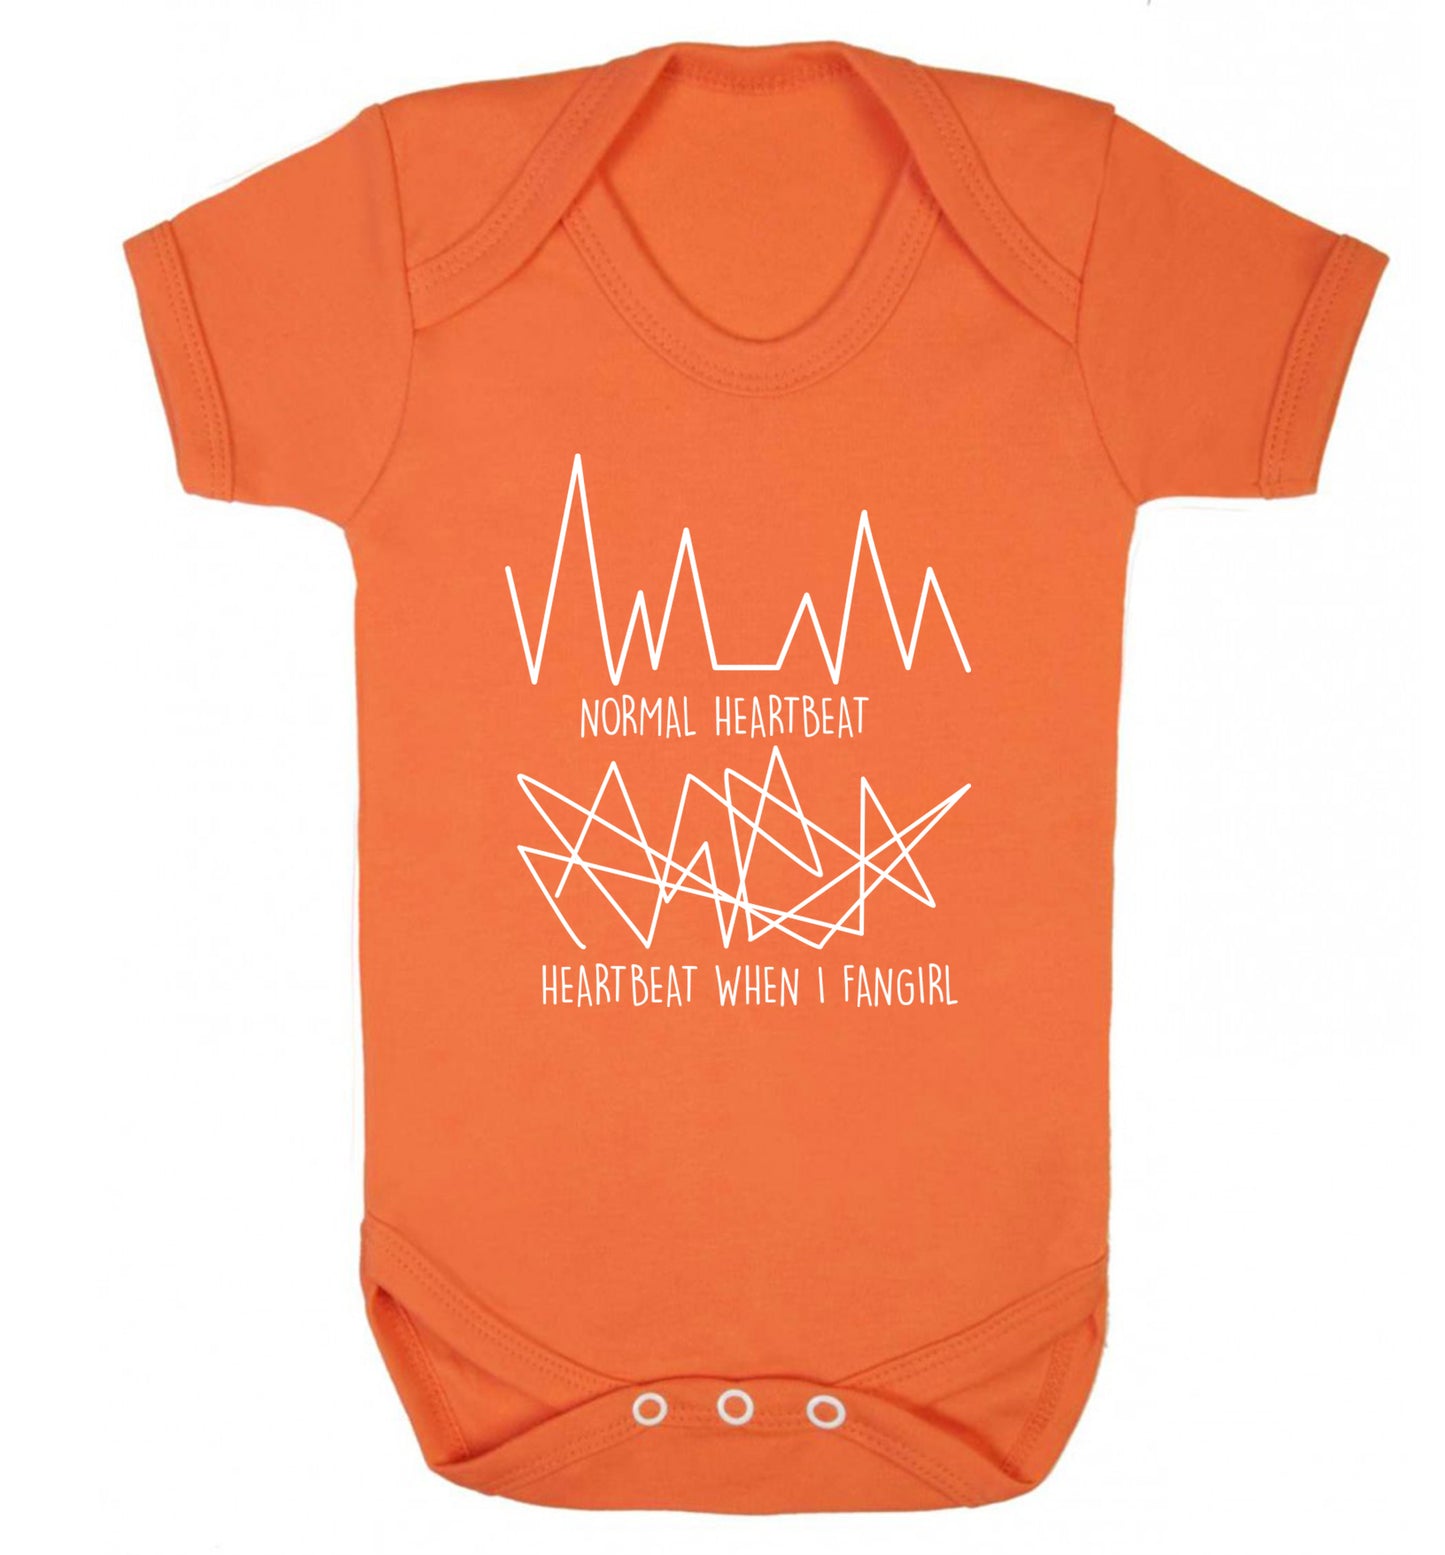 Normal heartbeat heartbeat when I fangirl Baby Vest orange 18-24 months